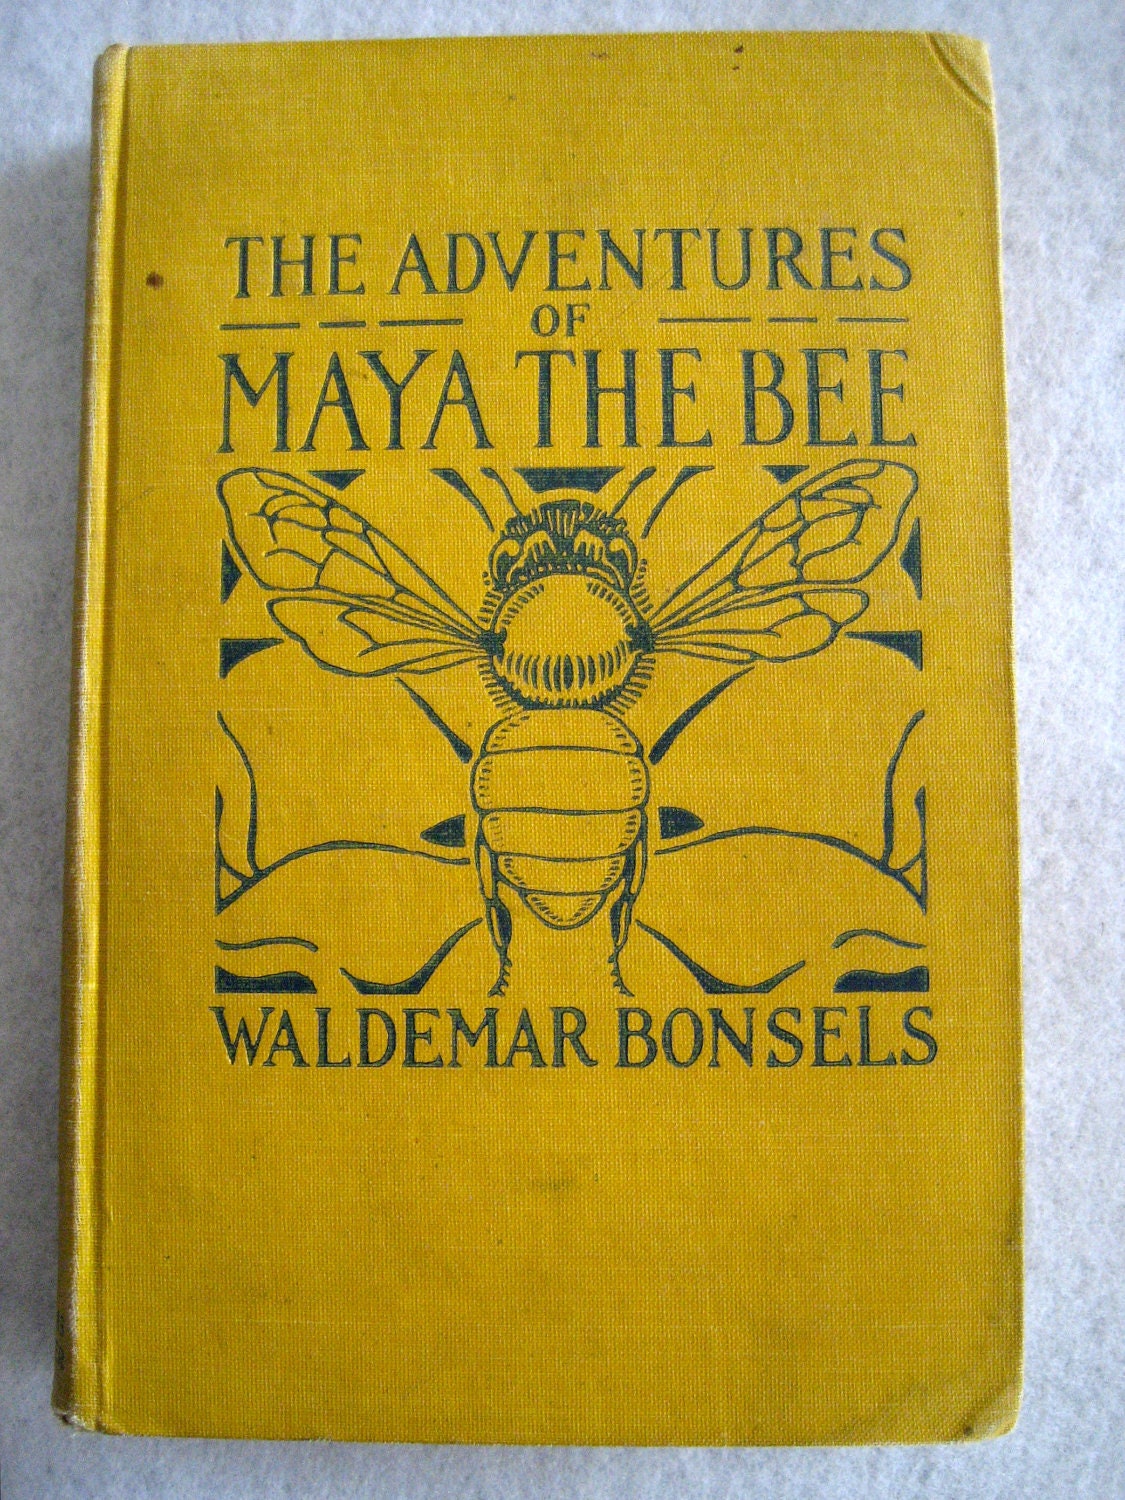 Vintage Children's book - The Adventures of Maya the Bee (Copyright 1922) - Peligraphics